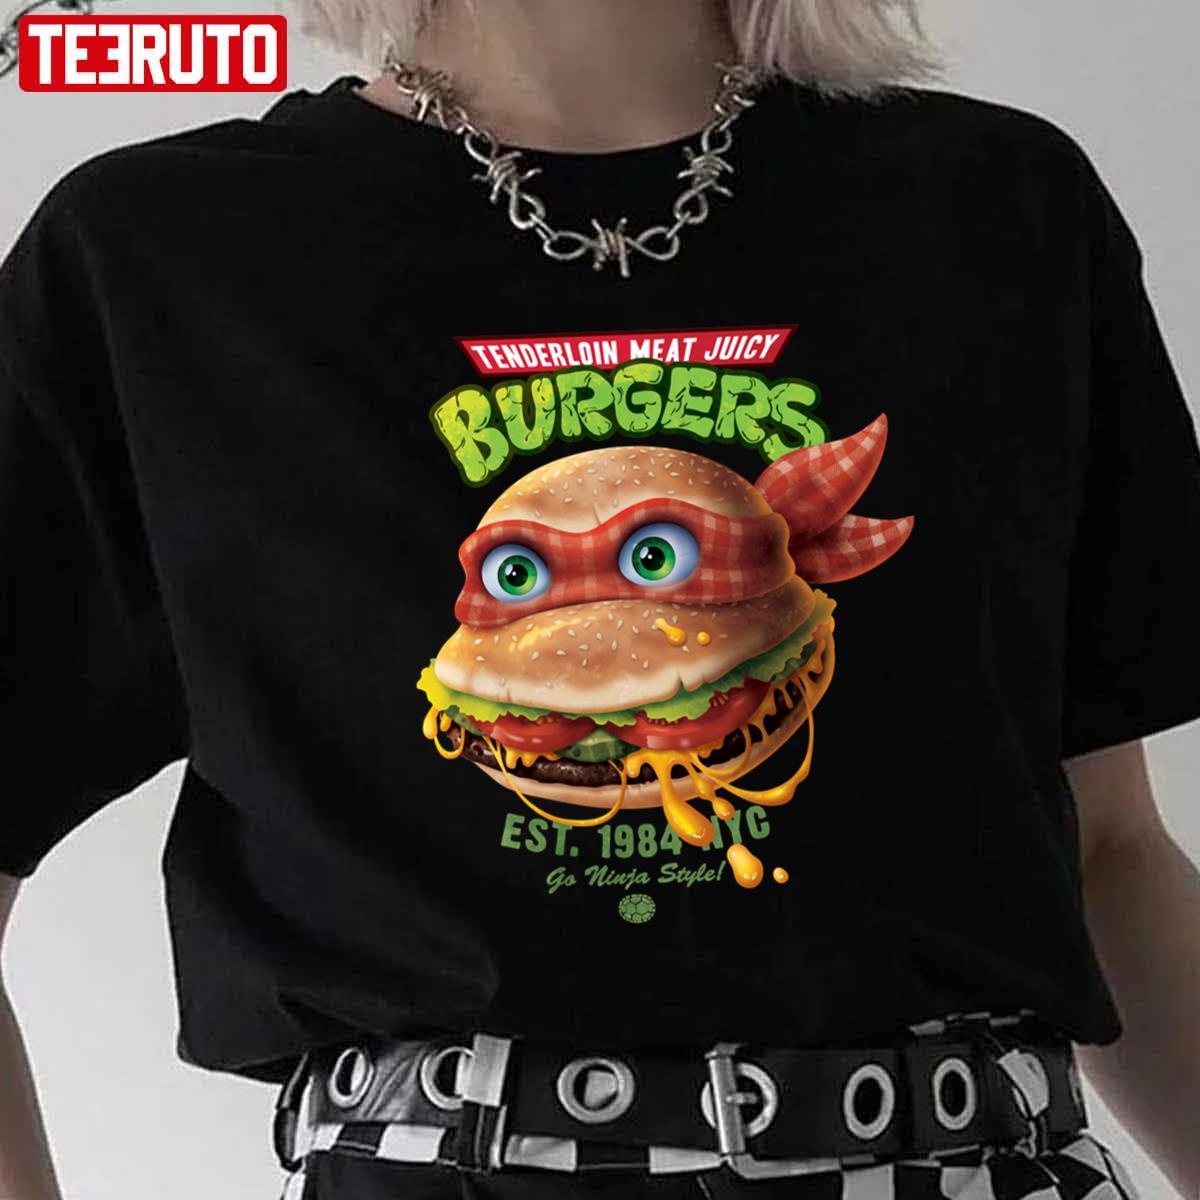 Tenderloin Meat Juicy Burgers Teenage Mutant Ninja Turtles Unisex